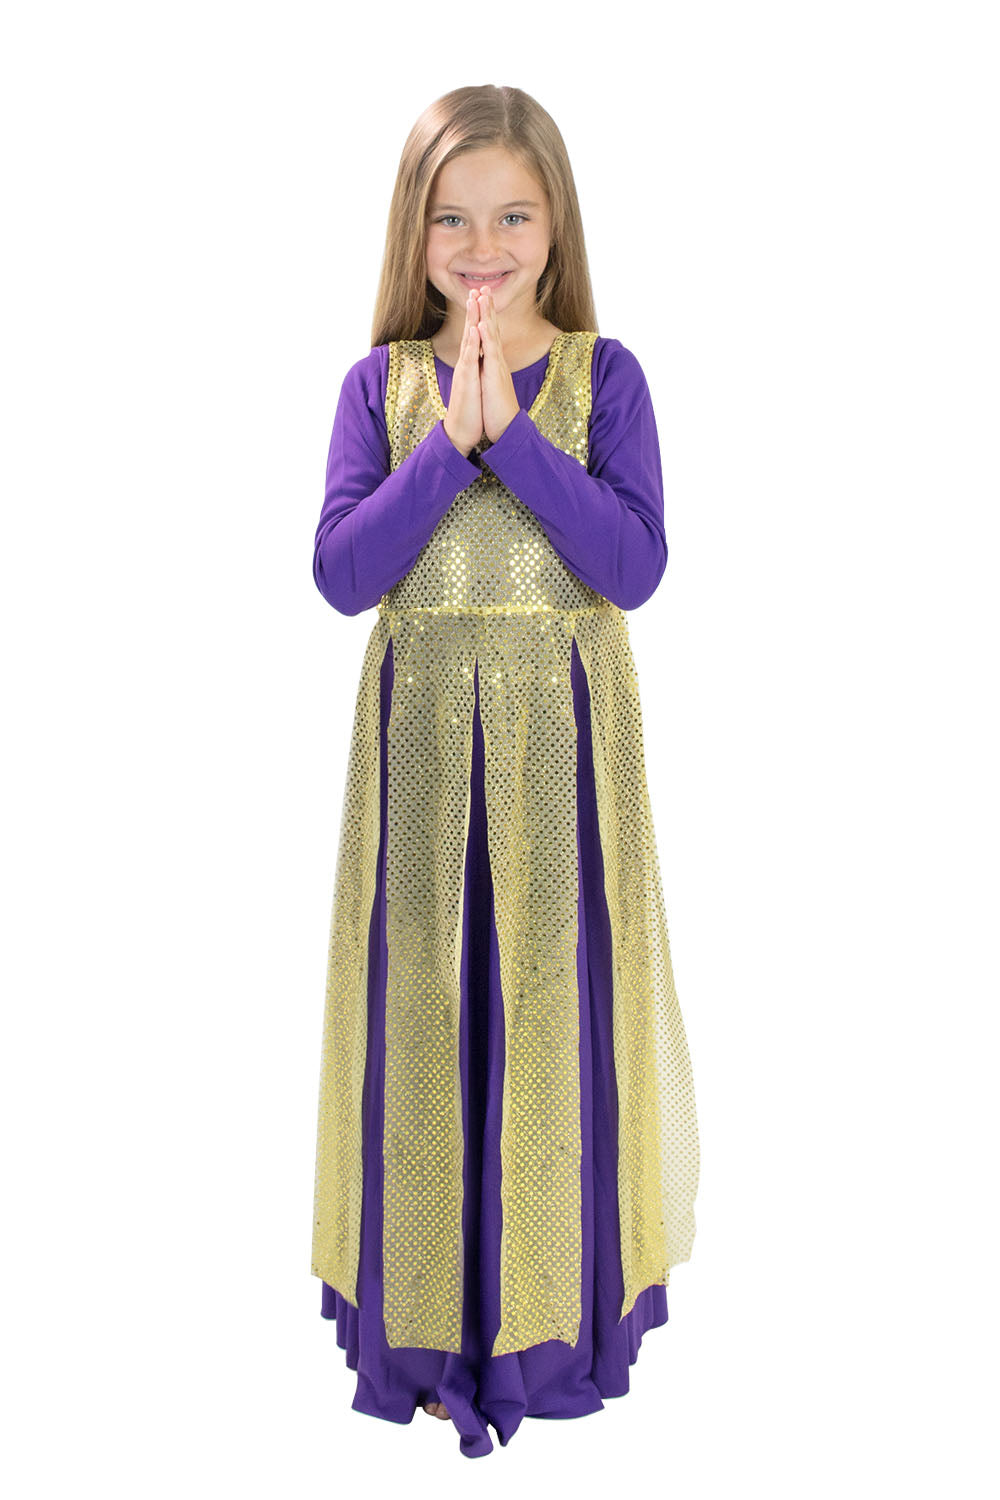 Children Liturgical Sequin Tunic with Streamer Skirt